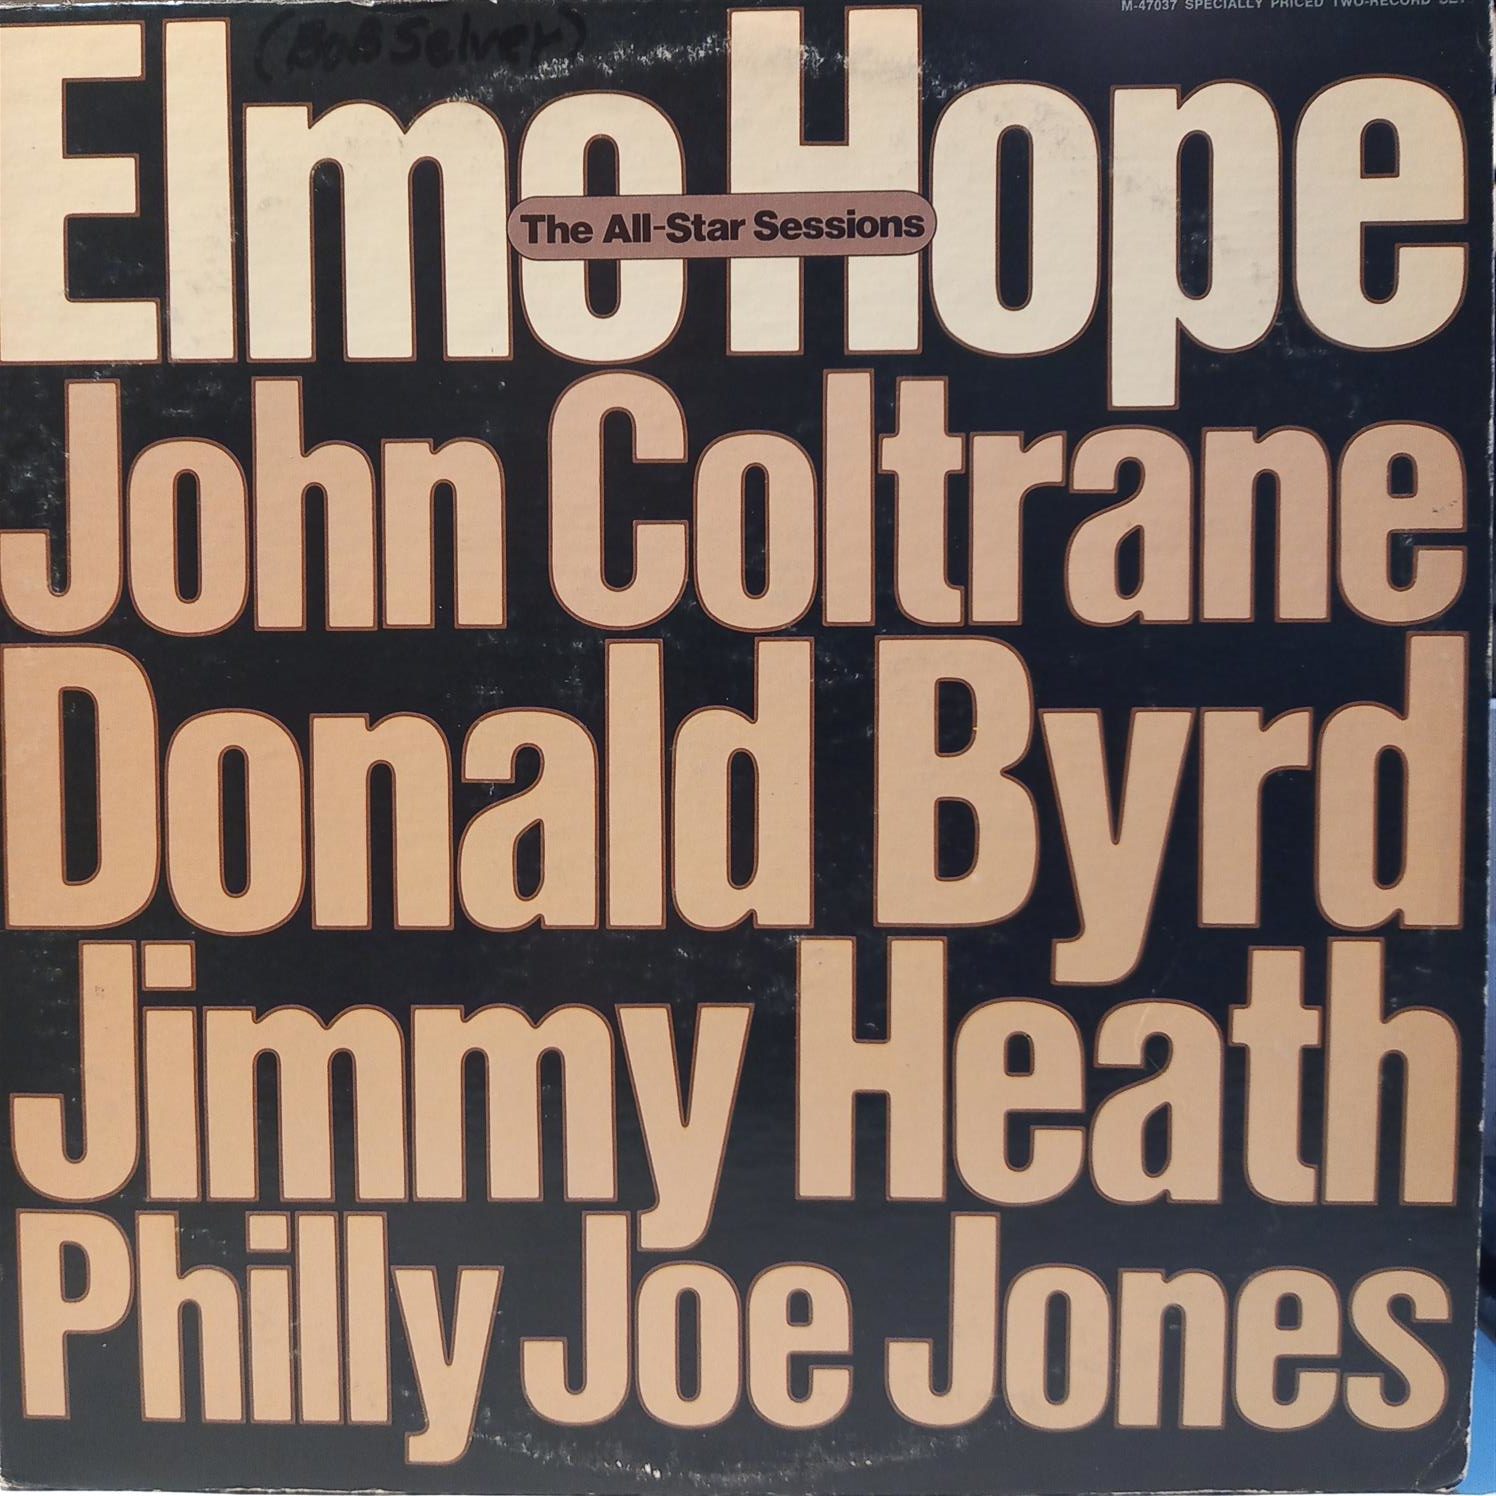 ELMO HOPE – JOHN COLTRANE – DONALD BYRD – JIMMY HEAT – PHILLY JOE JONES – THE ALL-STAR SESSIONS ON